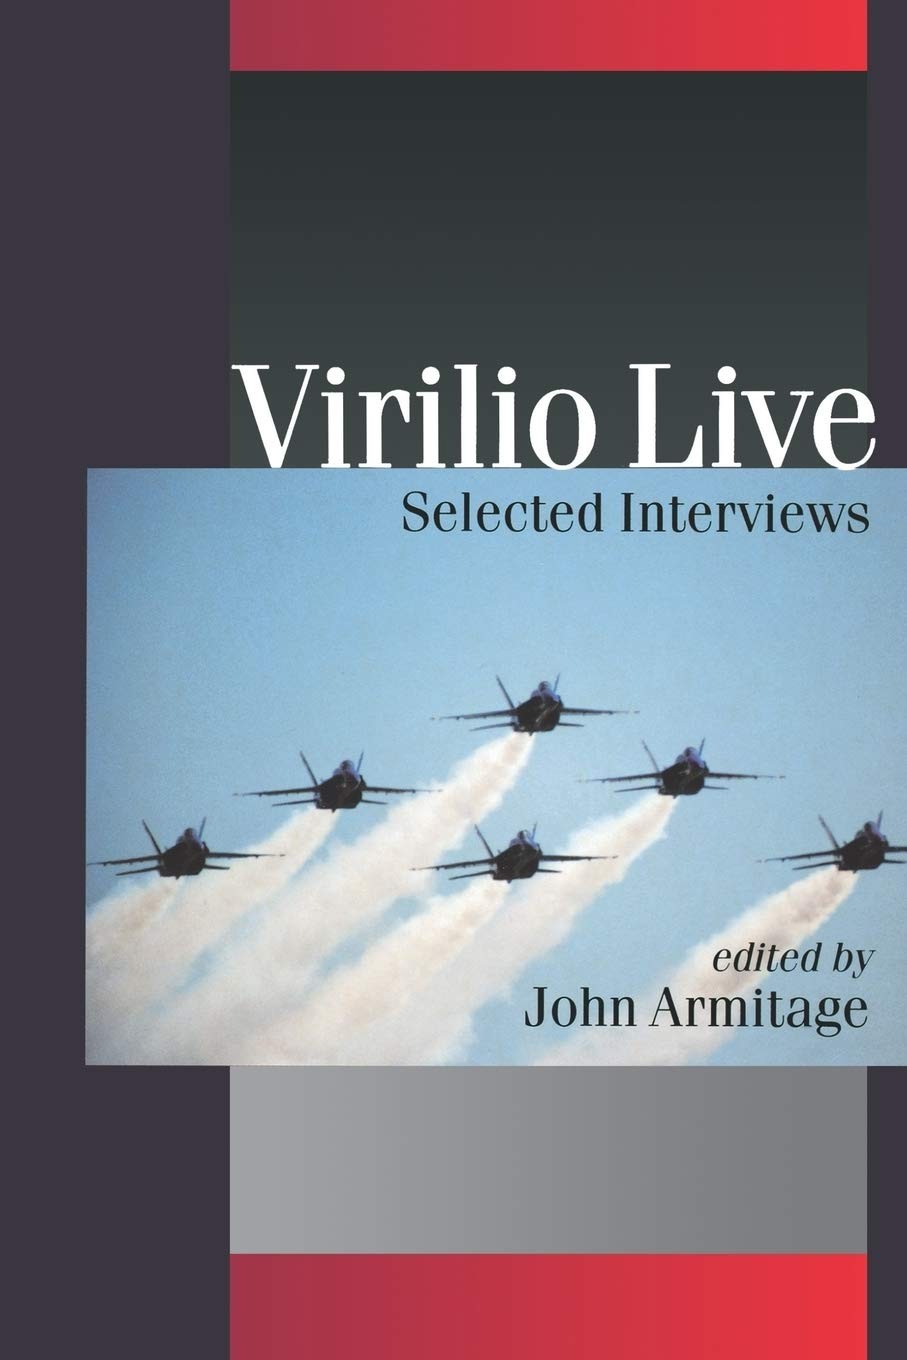 Virilio Live: Selected Interviews